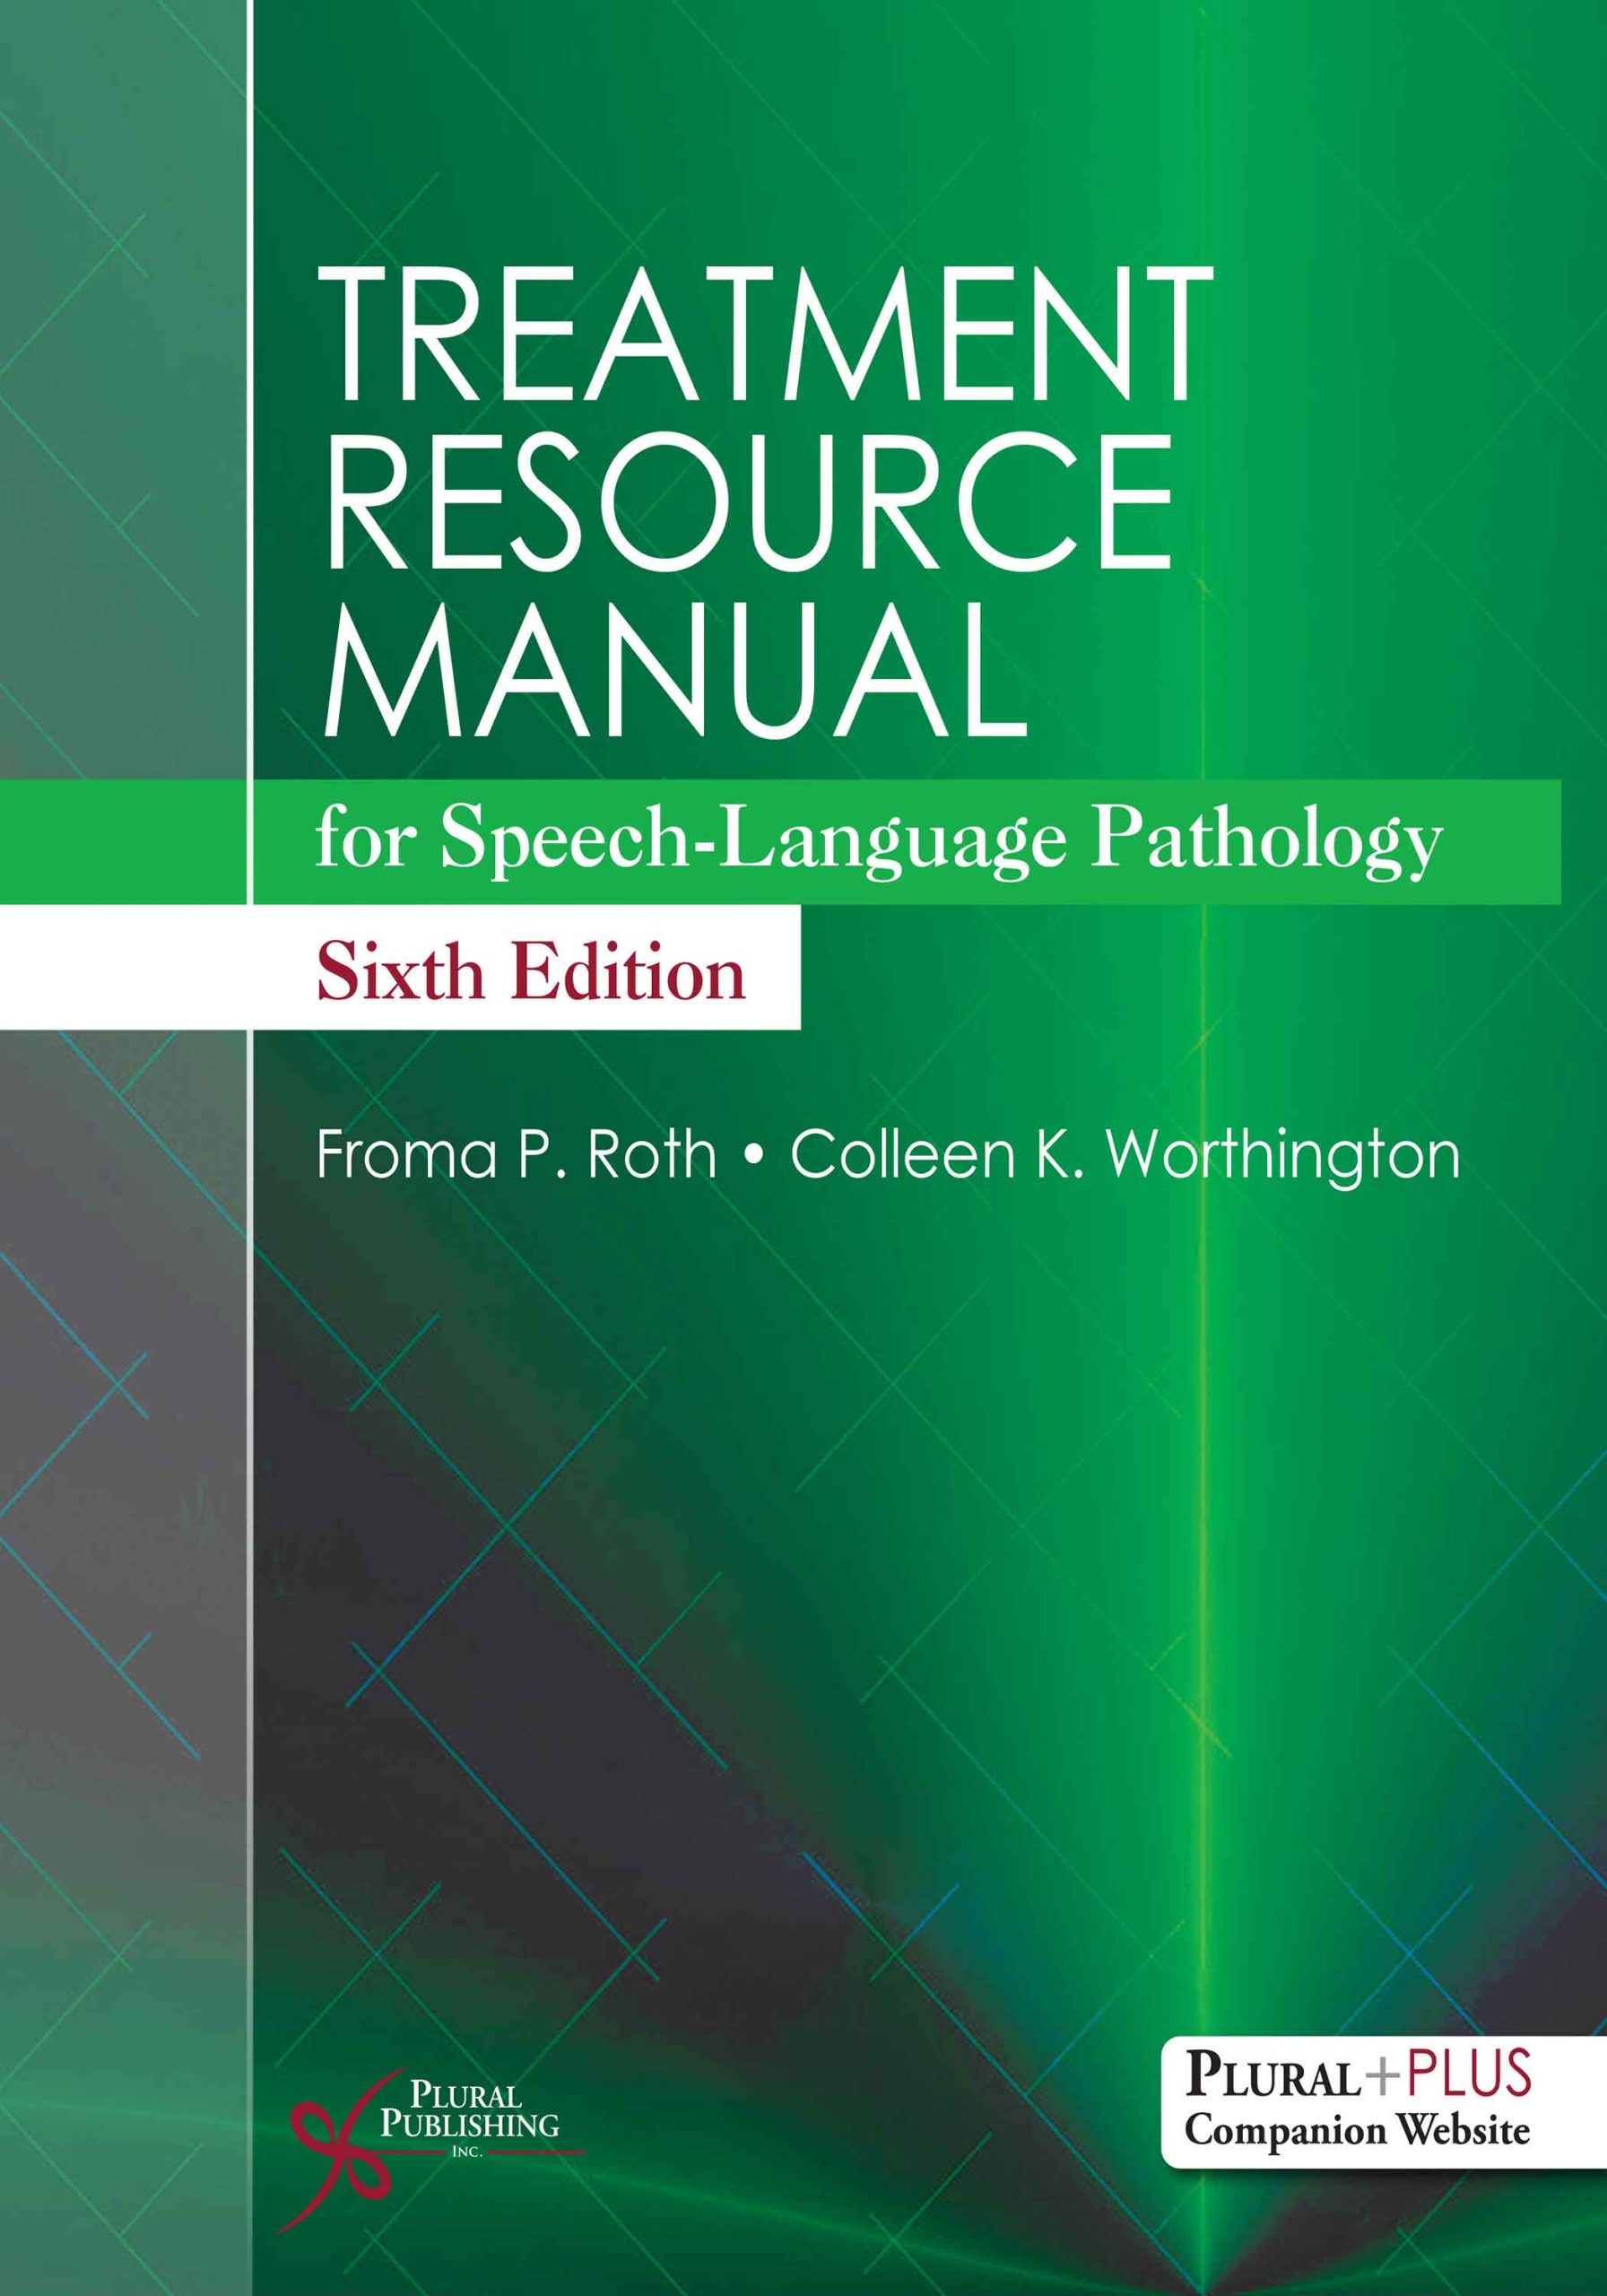 Sixth　Store　Speech-Language　Resource　Plural　(India)　Edition　Hindustan　Publishing　–　Treatment　Corporation　Pathology,　Manual　for　–